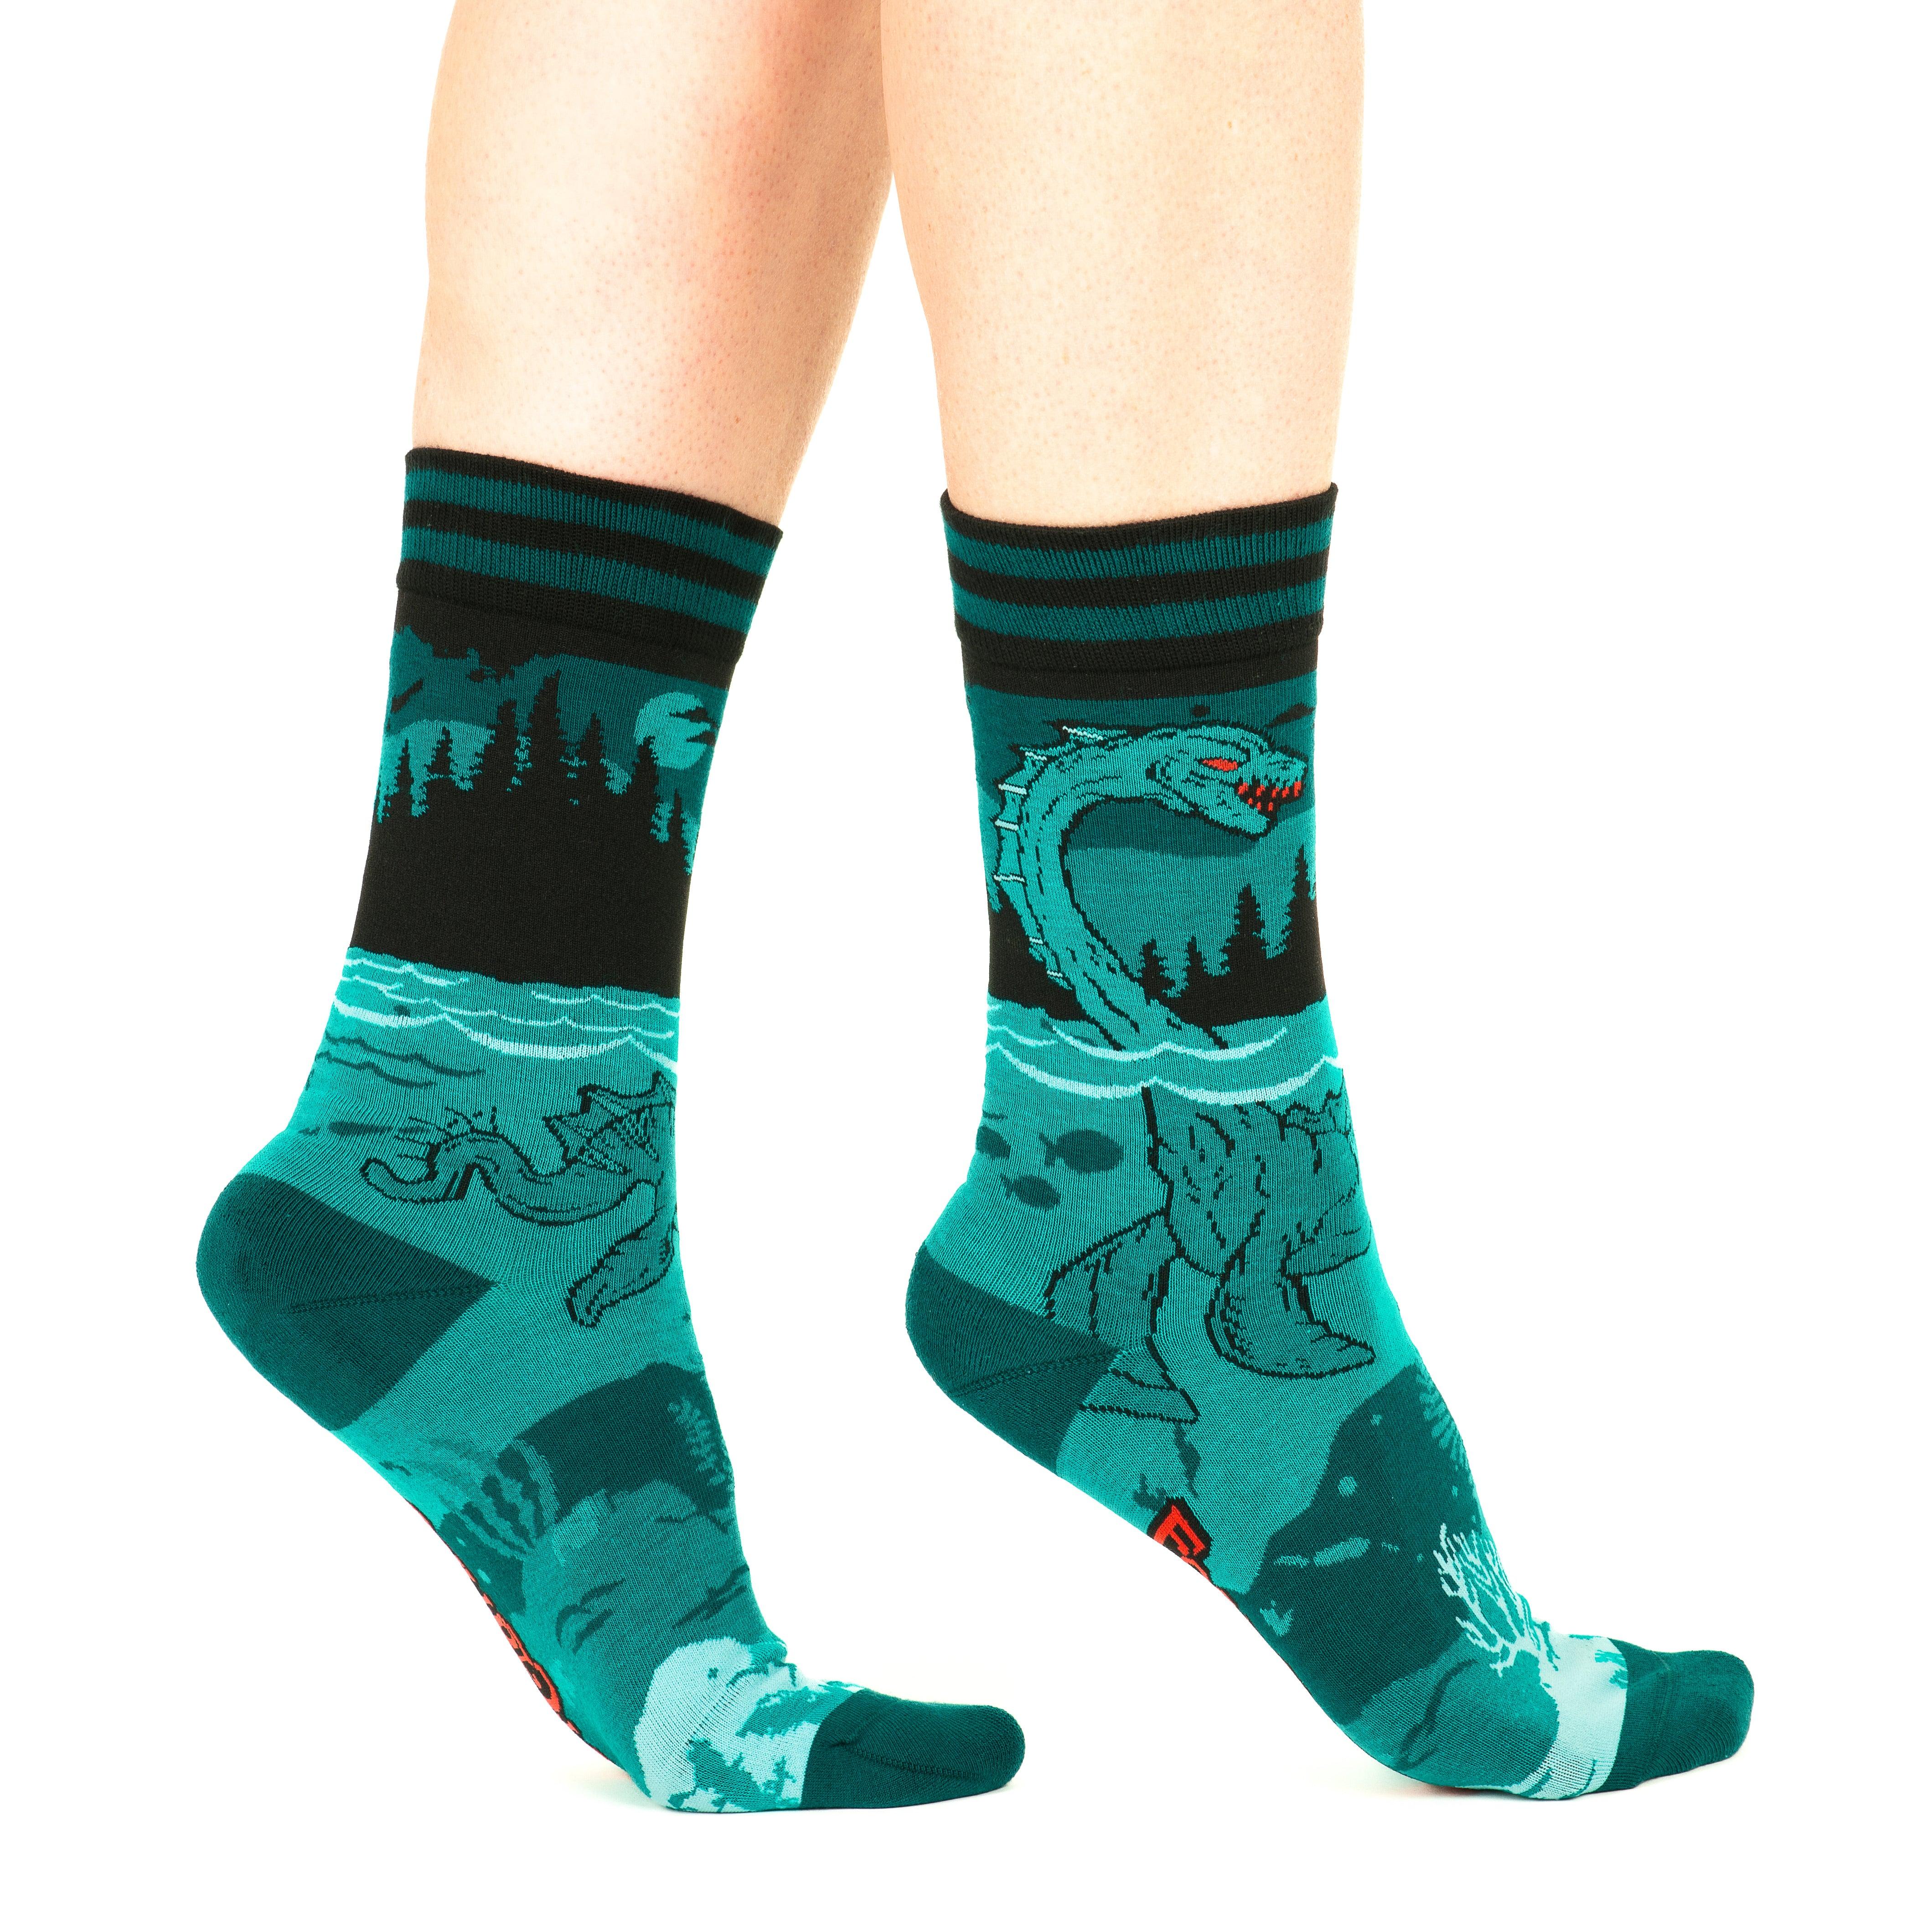 Nessie Crew Socks | FootClothes | Socks | 2103